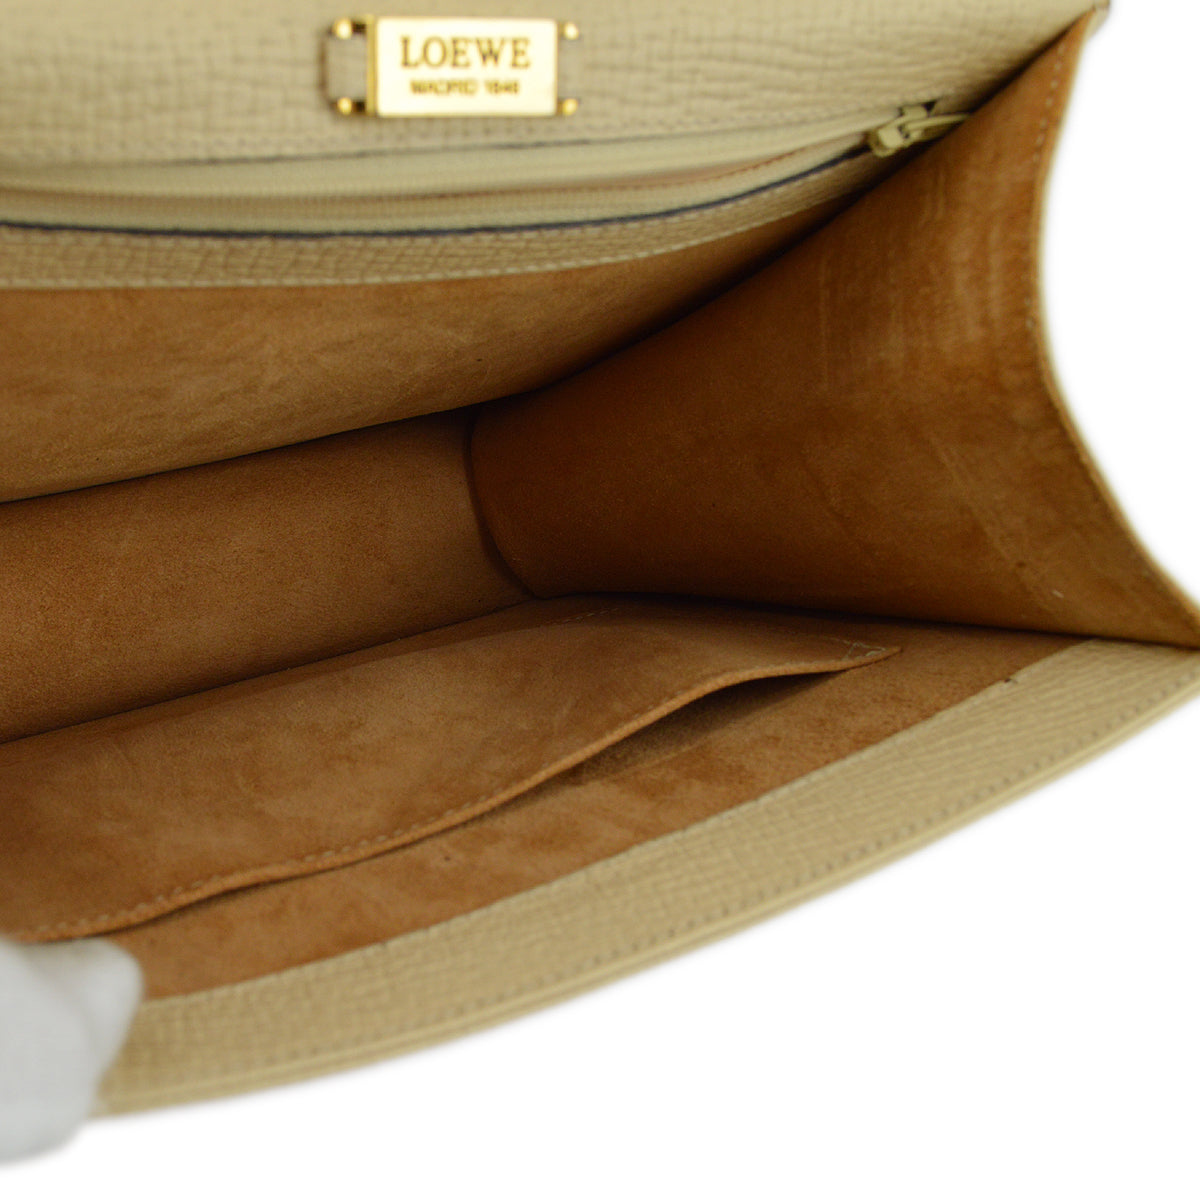 Loewe 米色 Barcelona 2way 單肩手提包